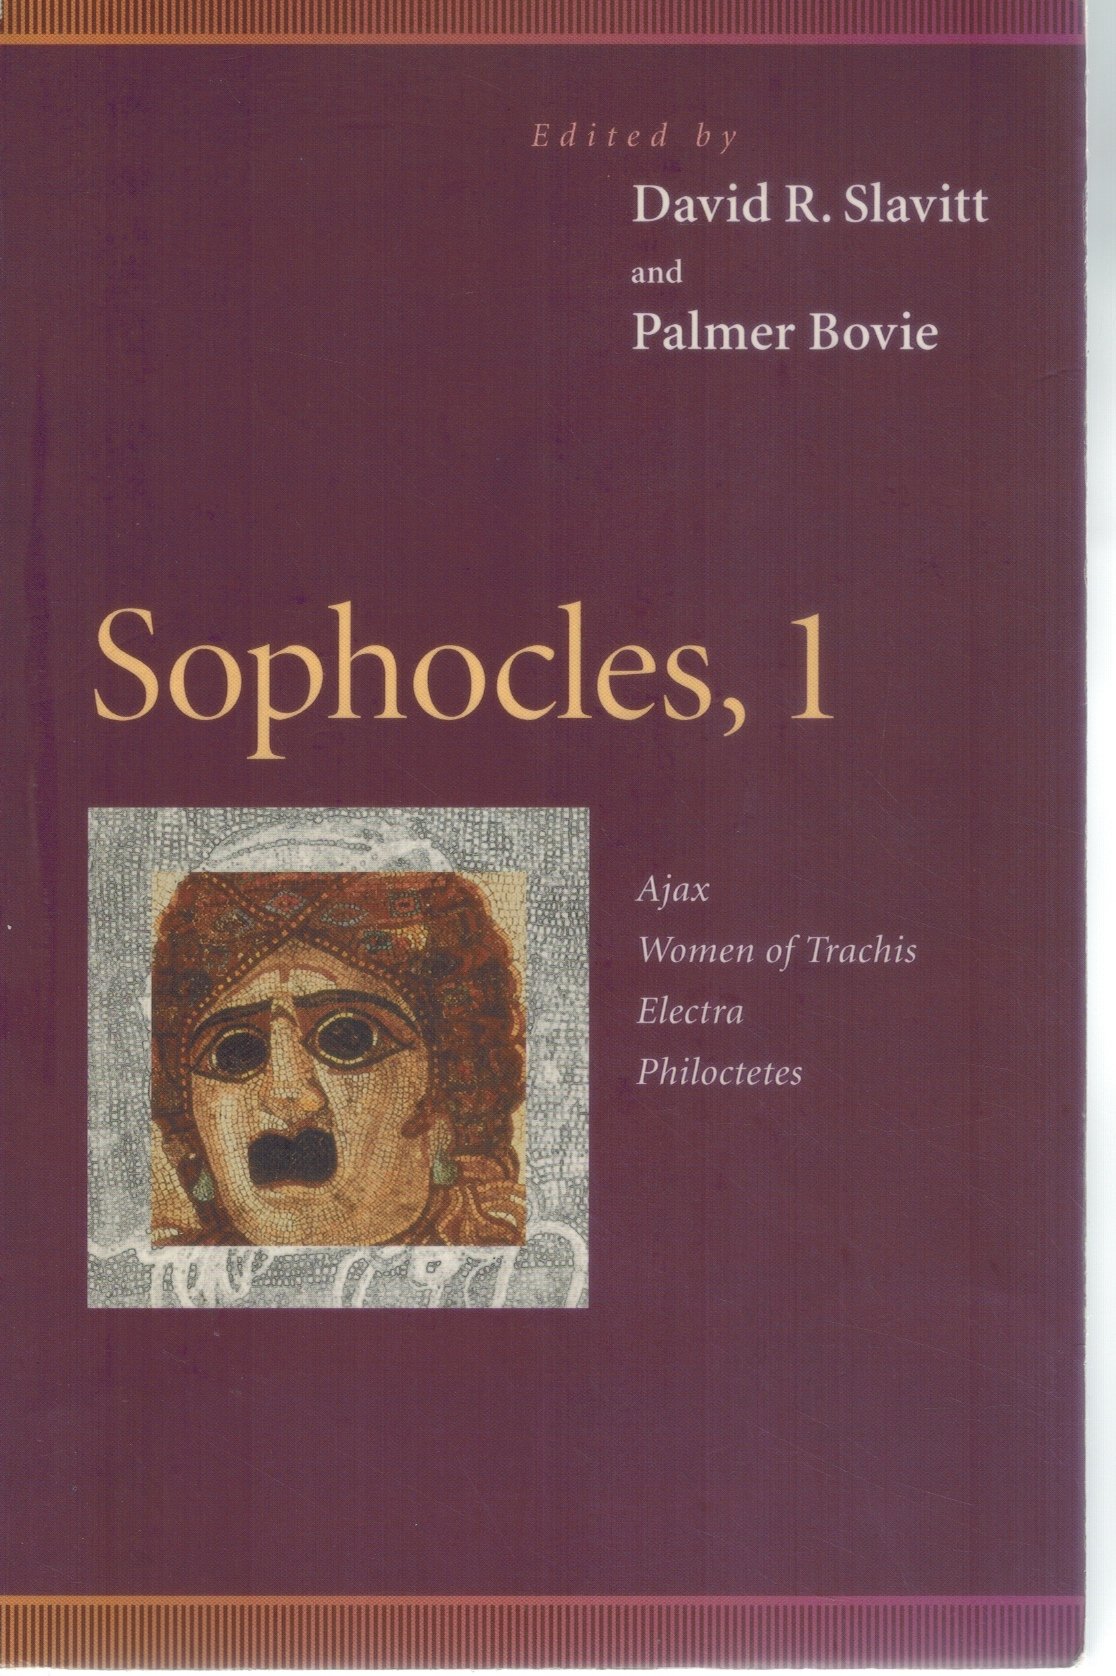 Sophocles, 1   Ajax, Women of Trachis, Electra, Philoctetes  by Slavitt